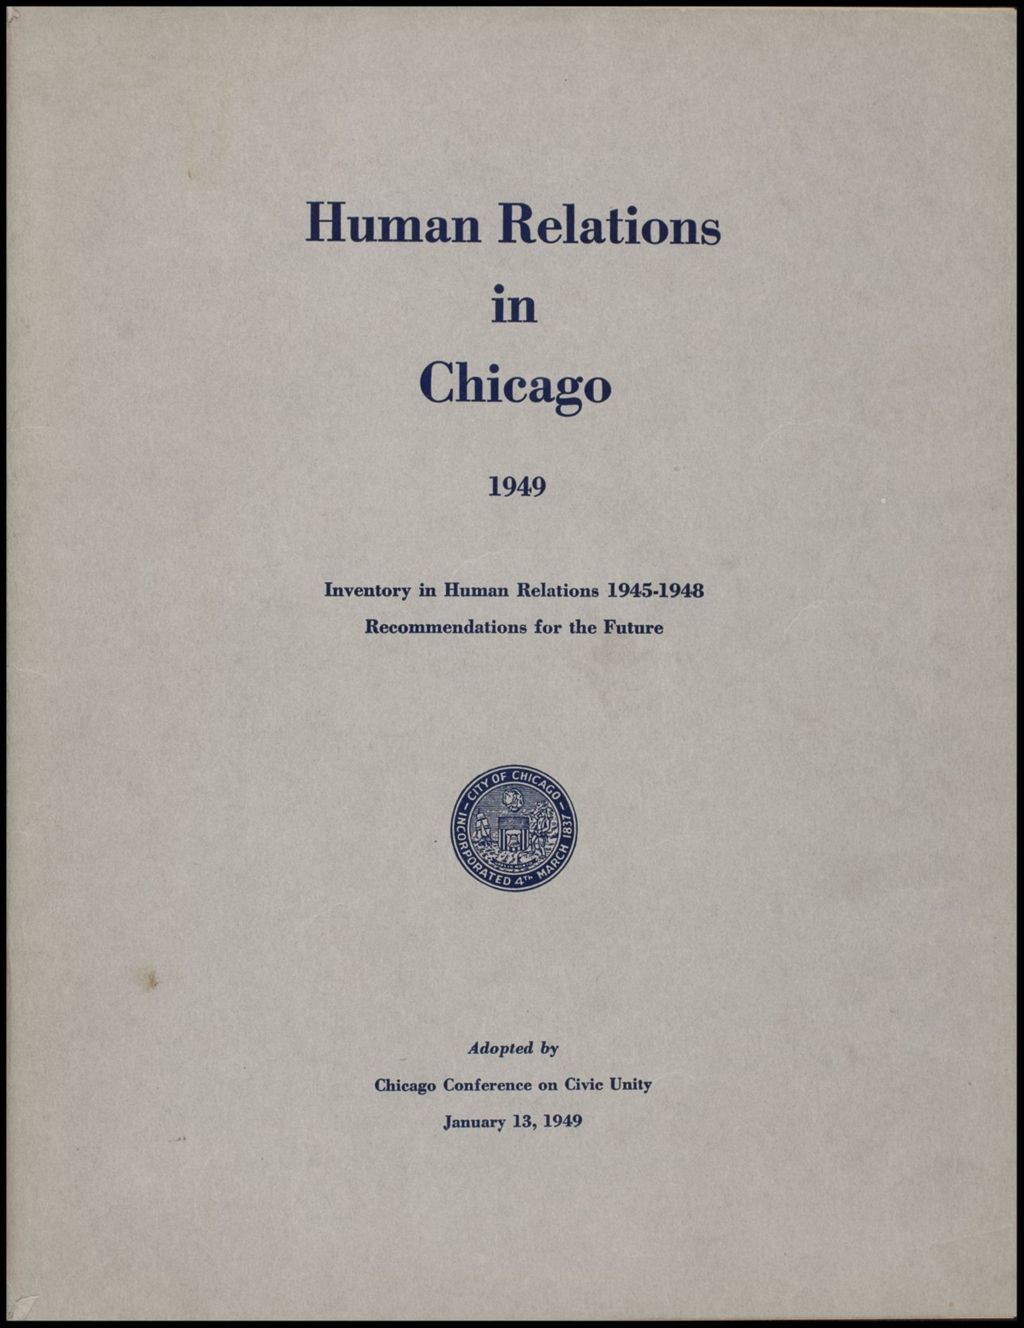 Miniature of Chicago Conference on Civic Unity, 1949 (Folder I-2802)